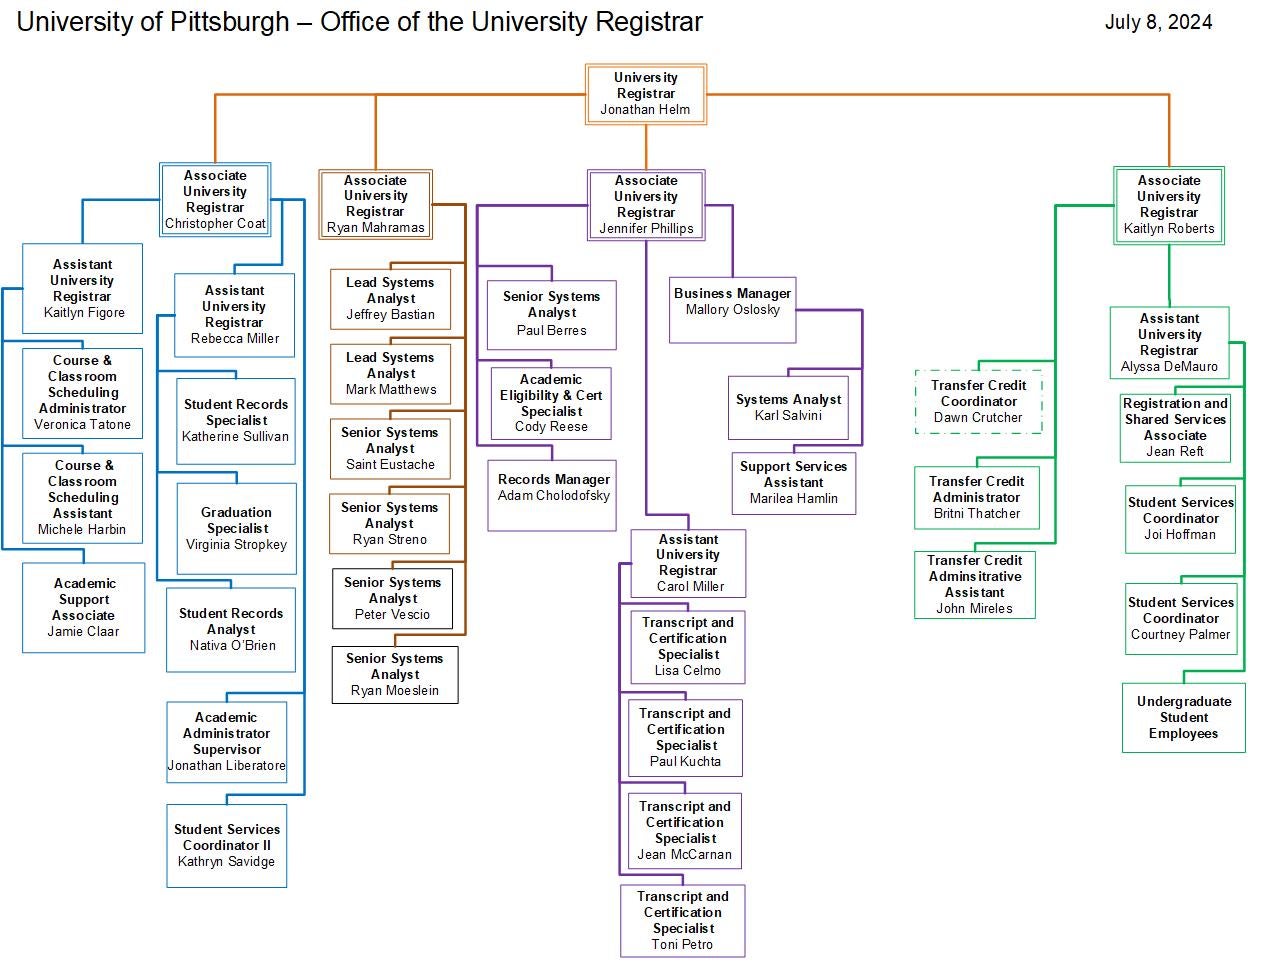 Office of the Registrar Organizational Chart